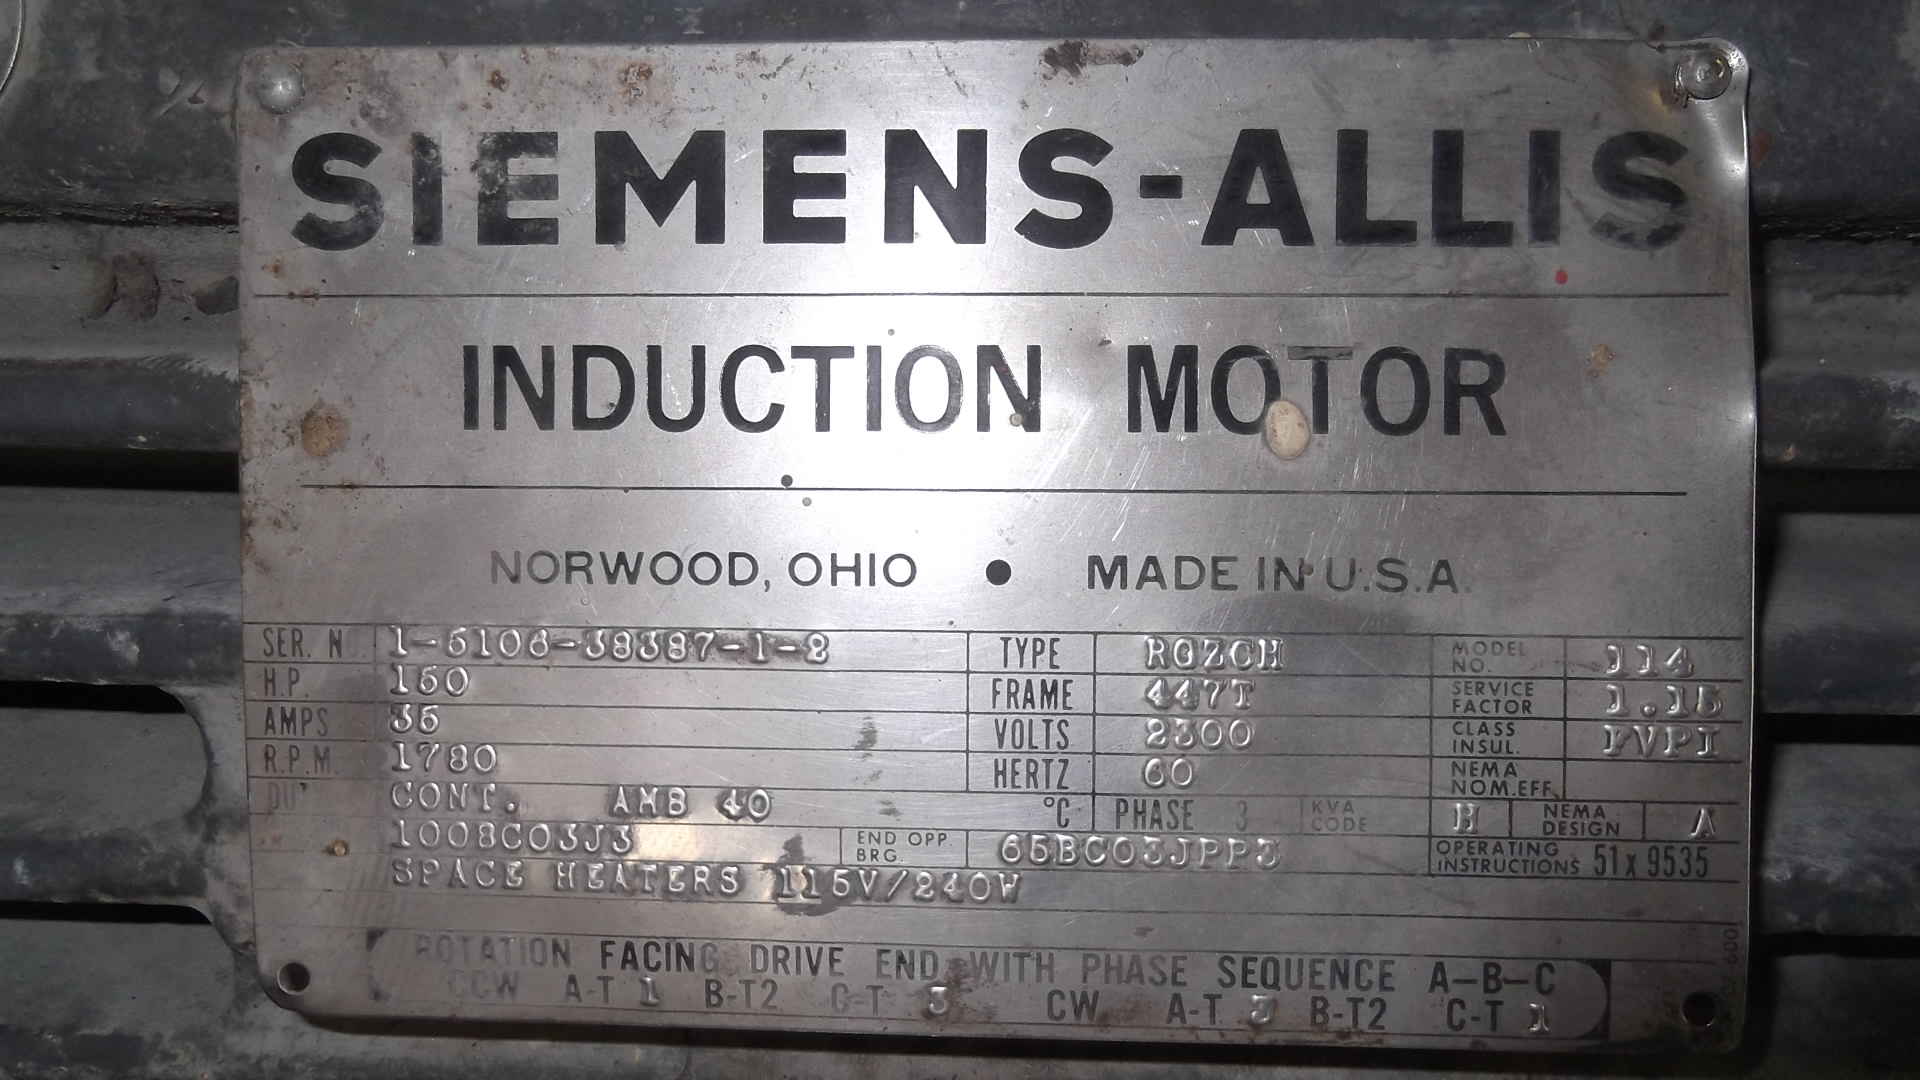 Siemens-Allis 150 HP 1800 RPM 447T Squirrel Cage Motors 67443